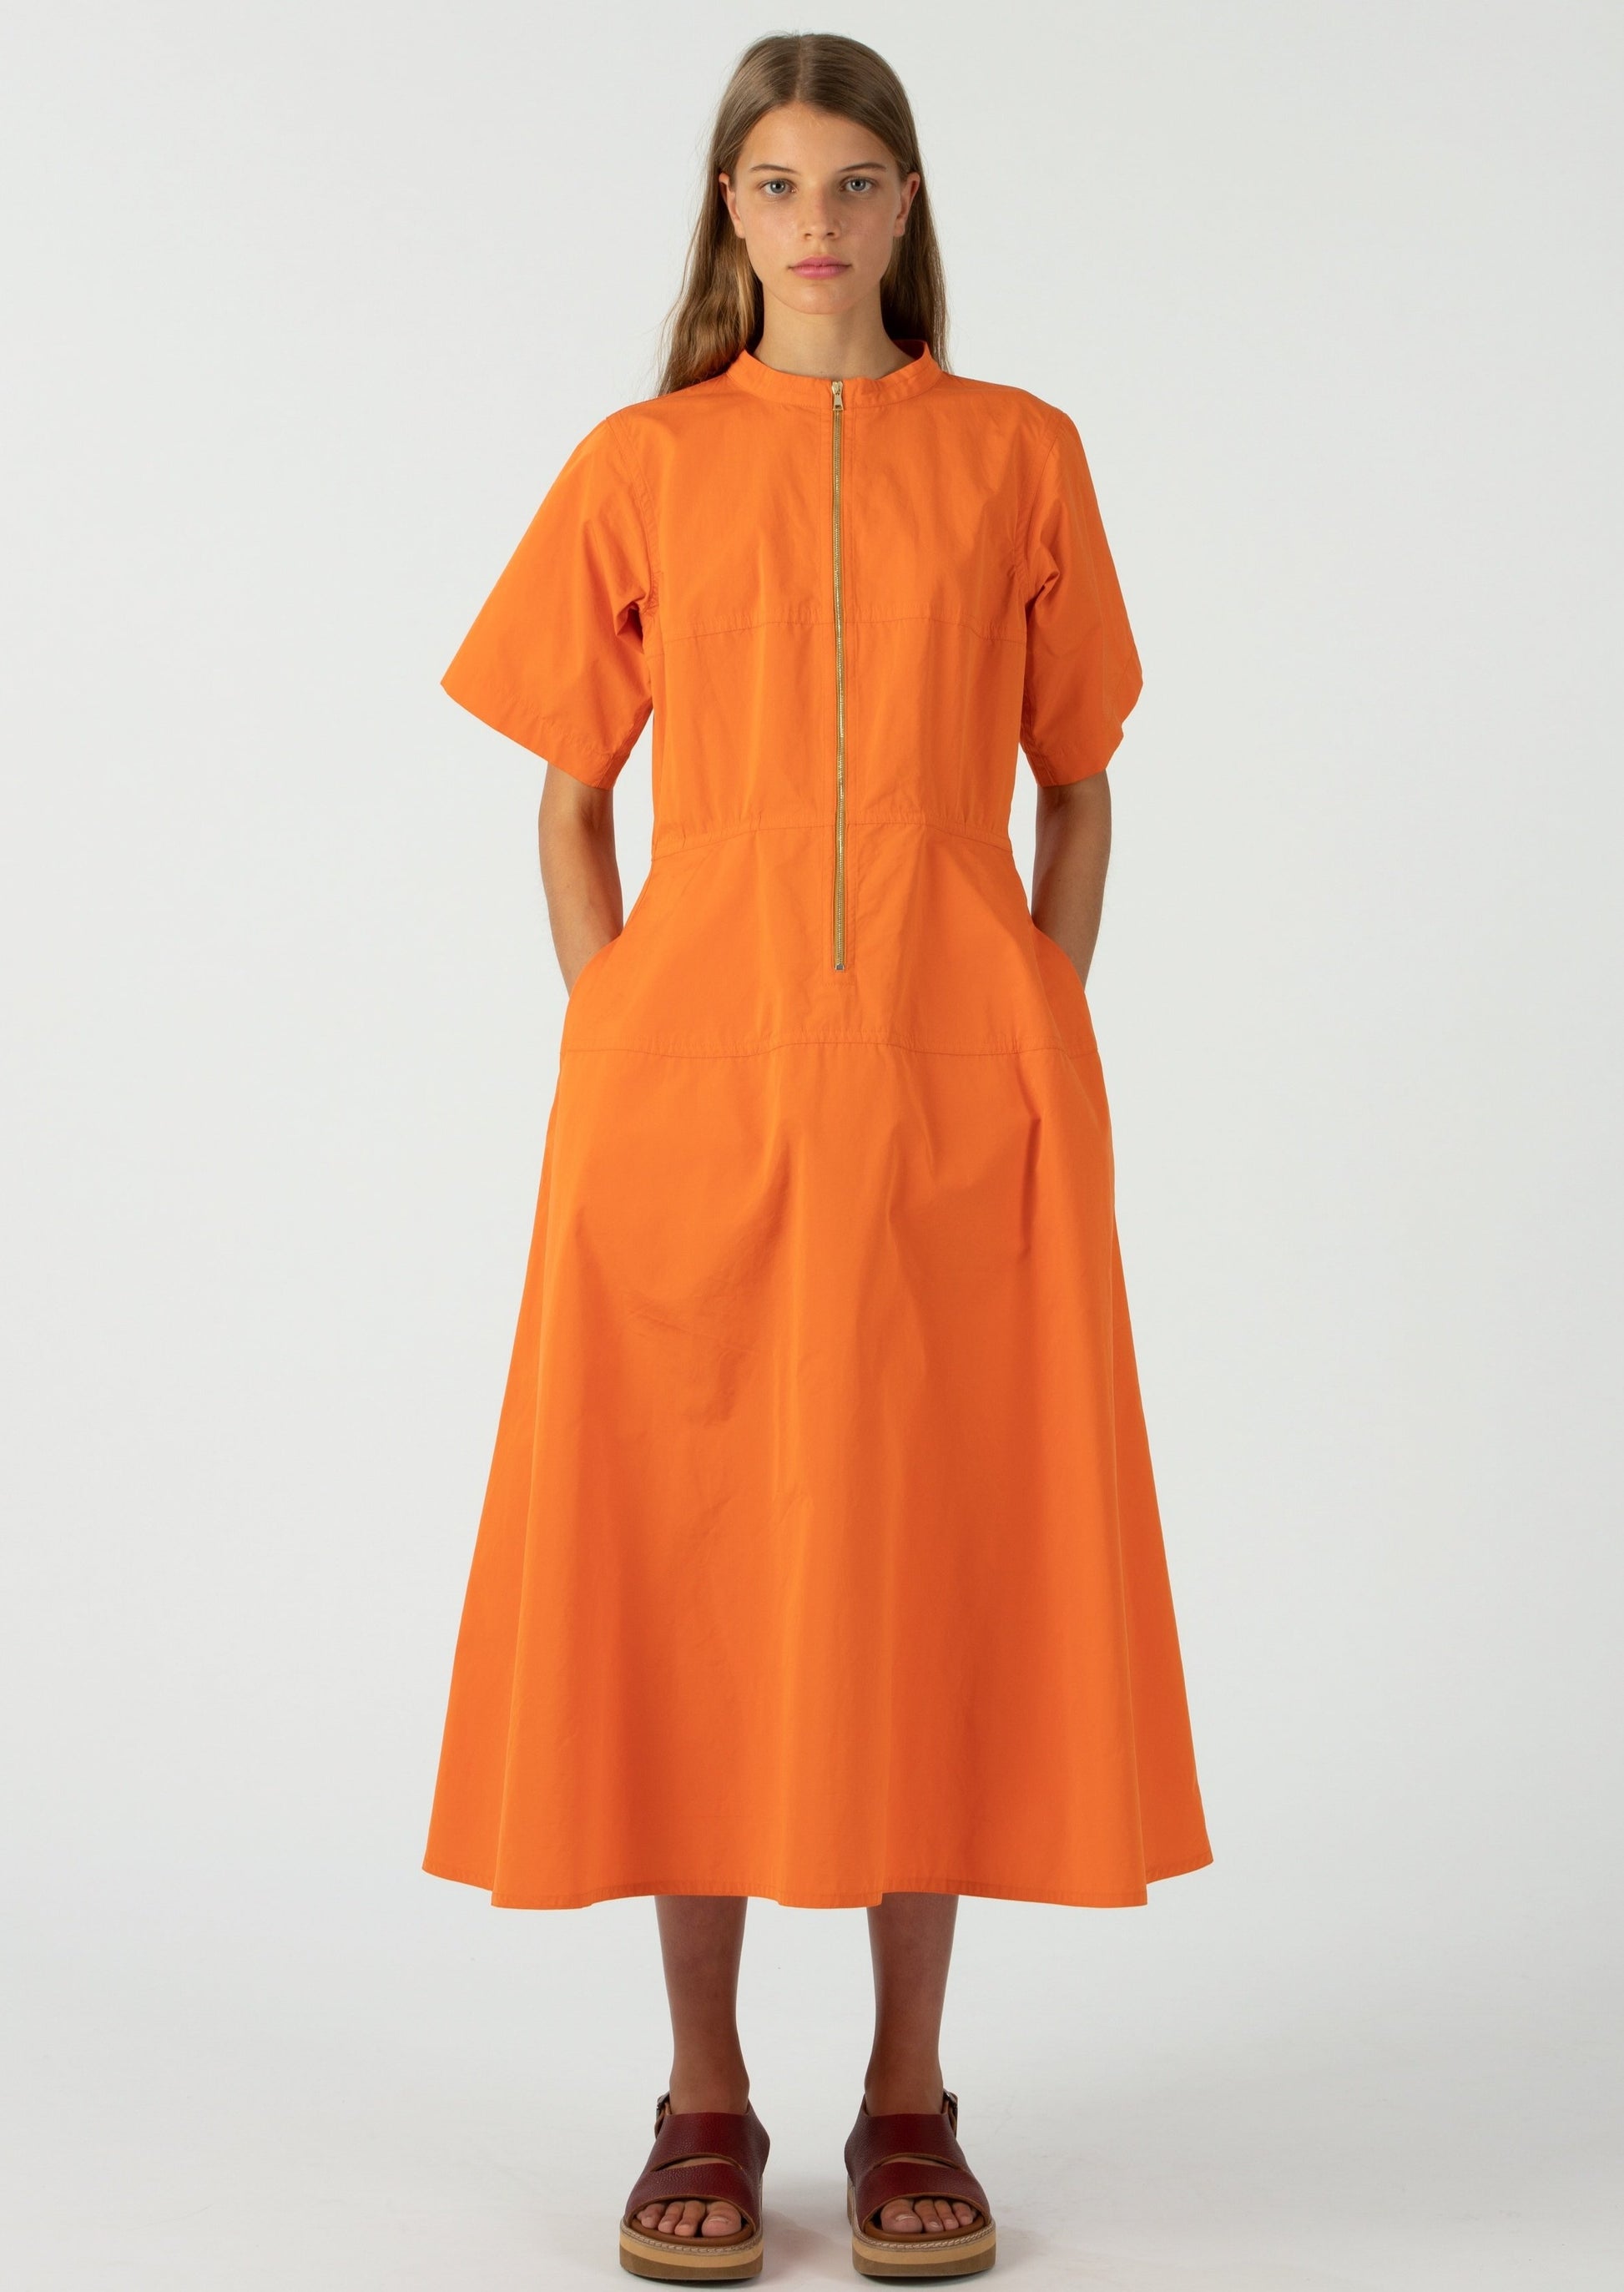 Sofie D'Hoore Orange Drama Dress